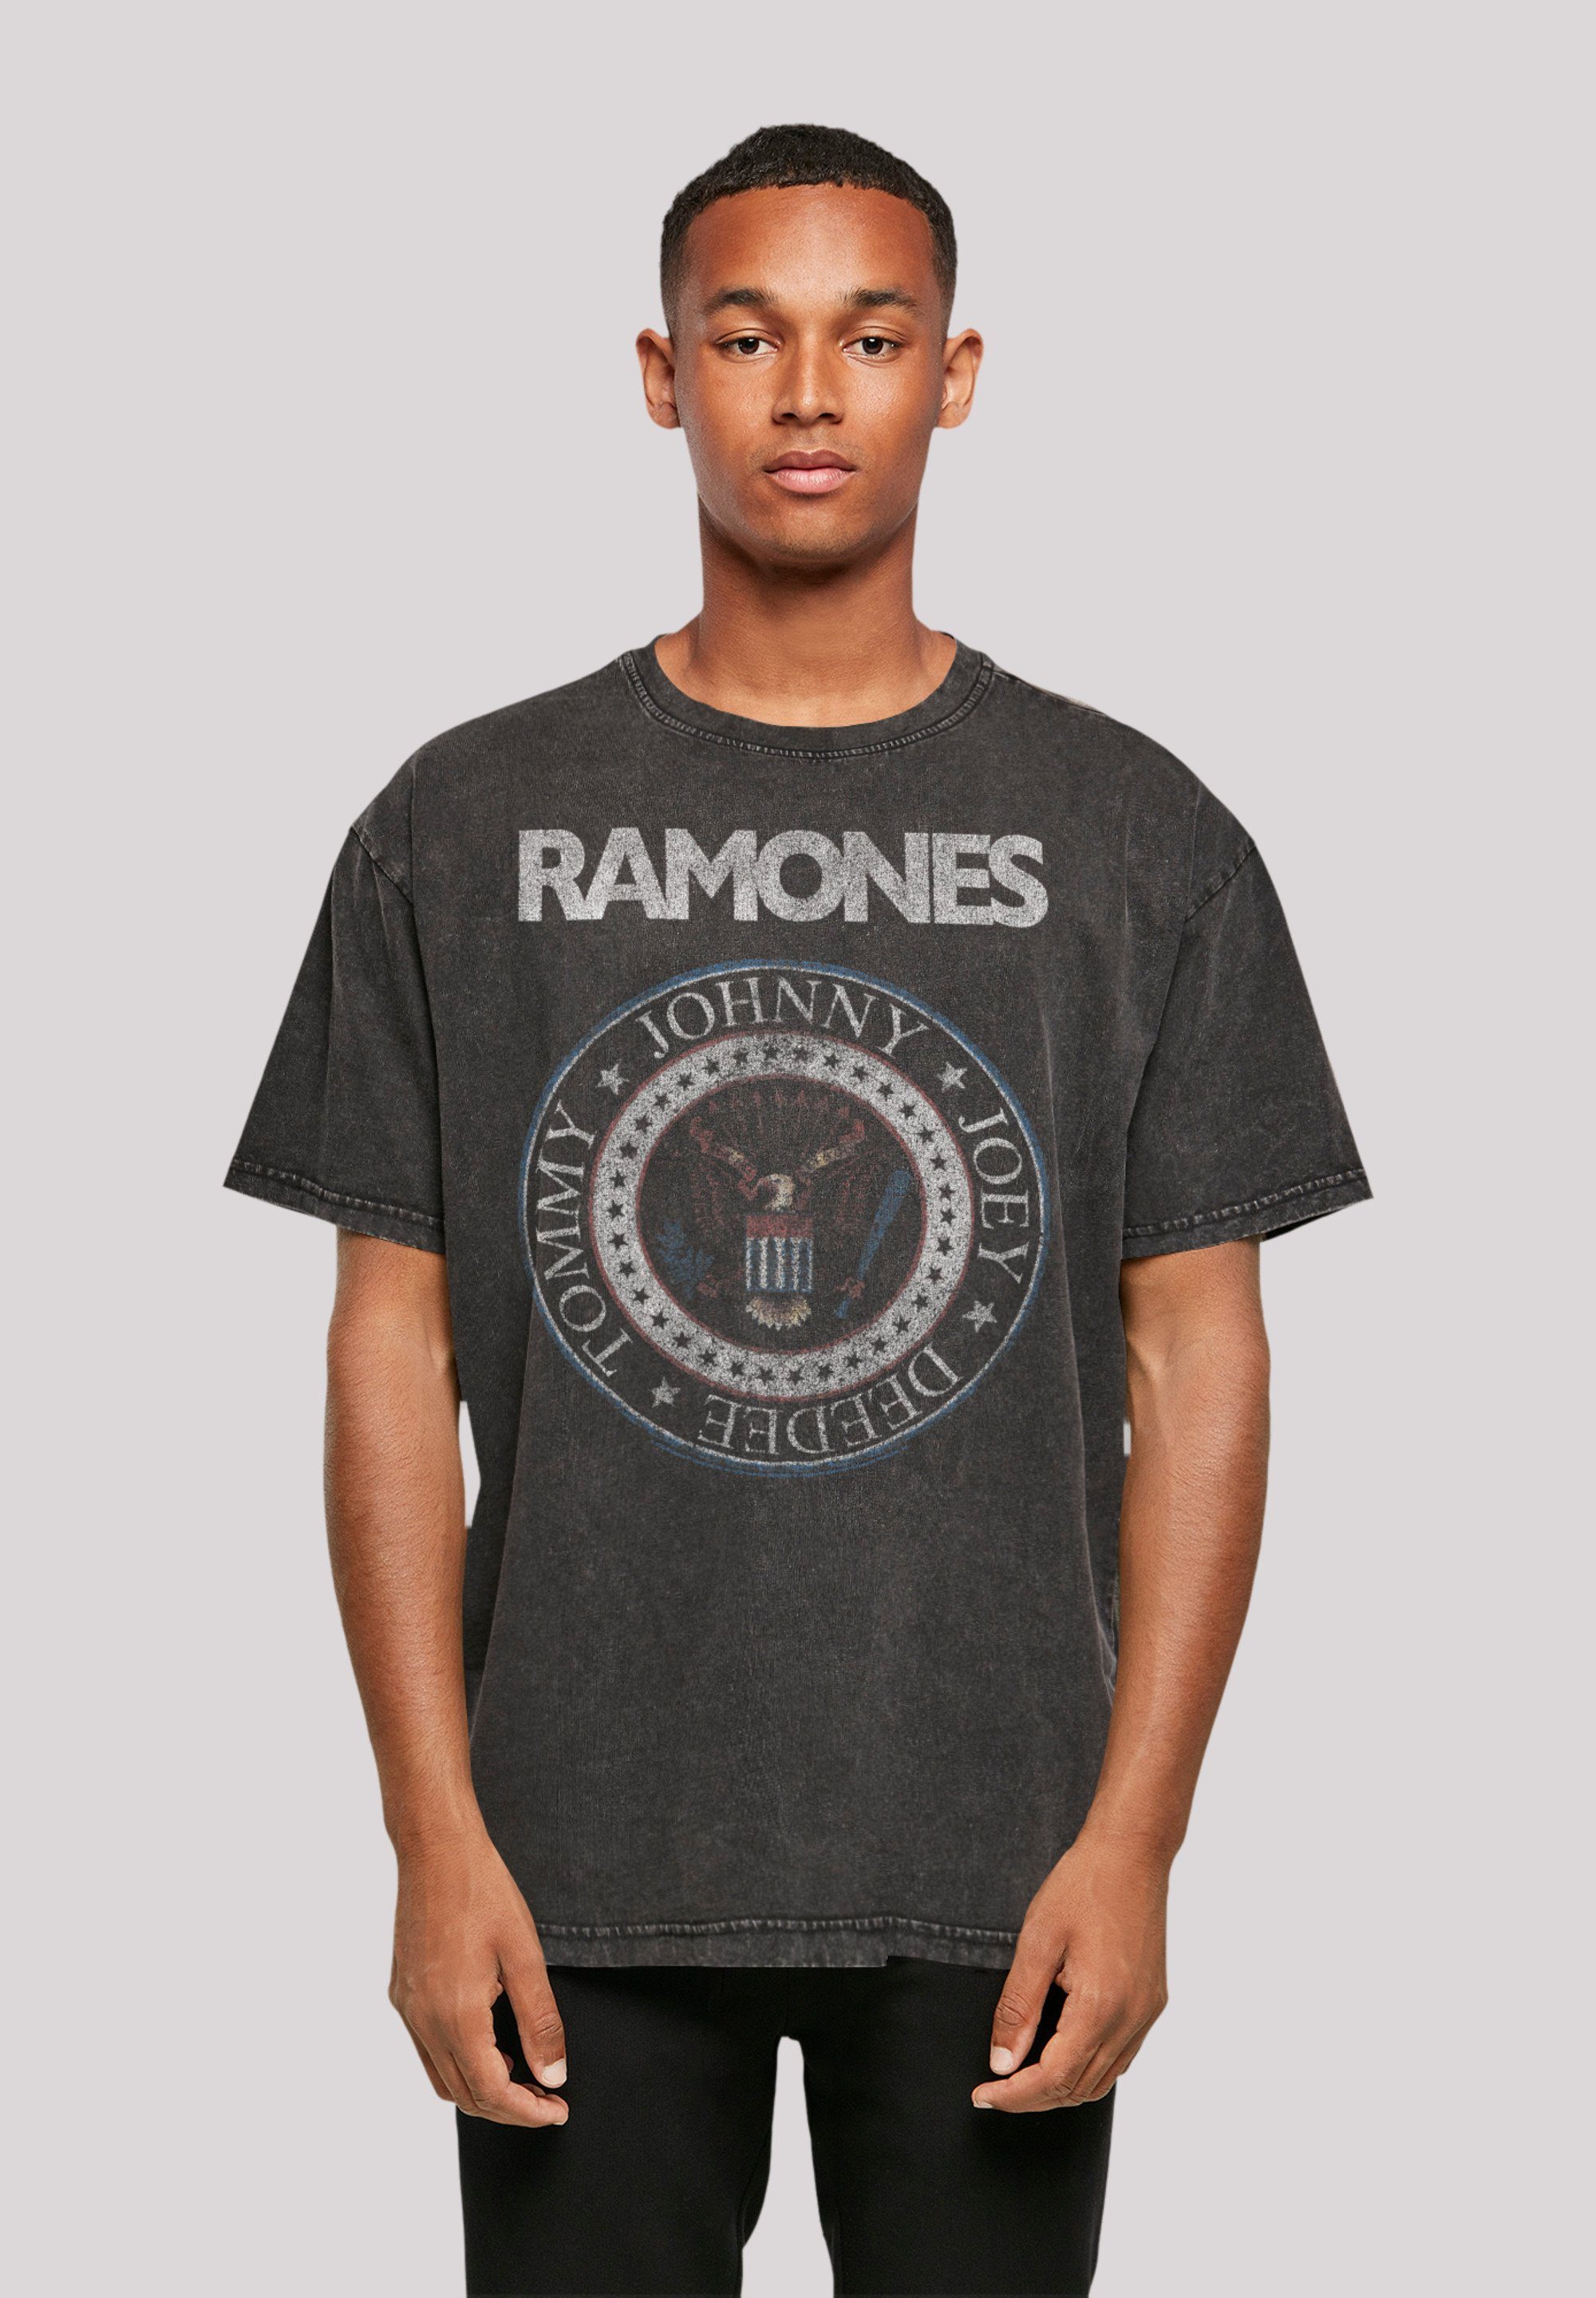 F4NT4STIC T-Shirt Ramones Rock Musik Band Red White And Seal Premium Qualität, Band, Rock-Musik schwarz